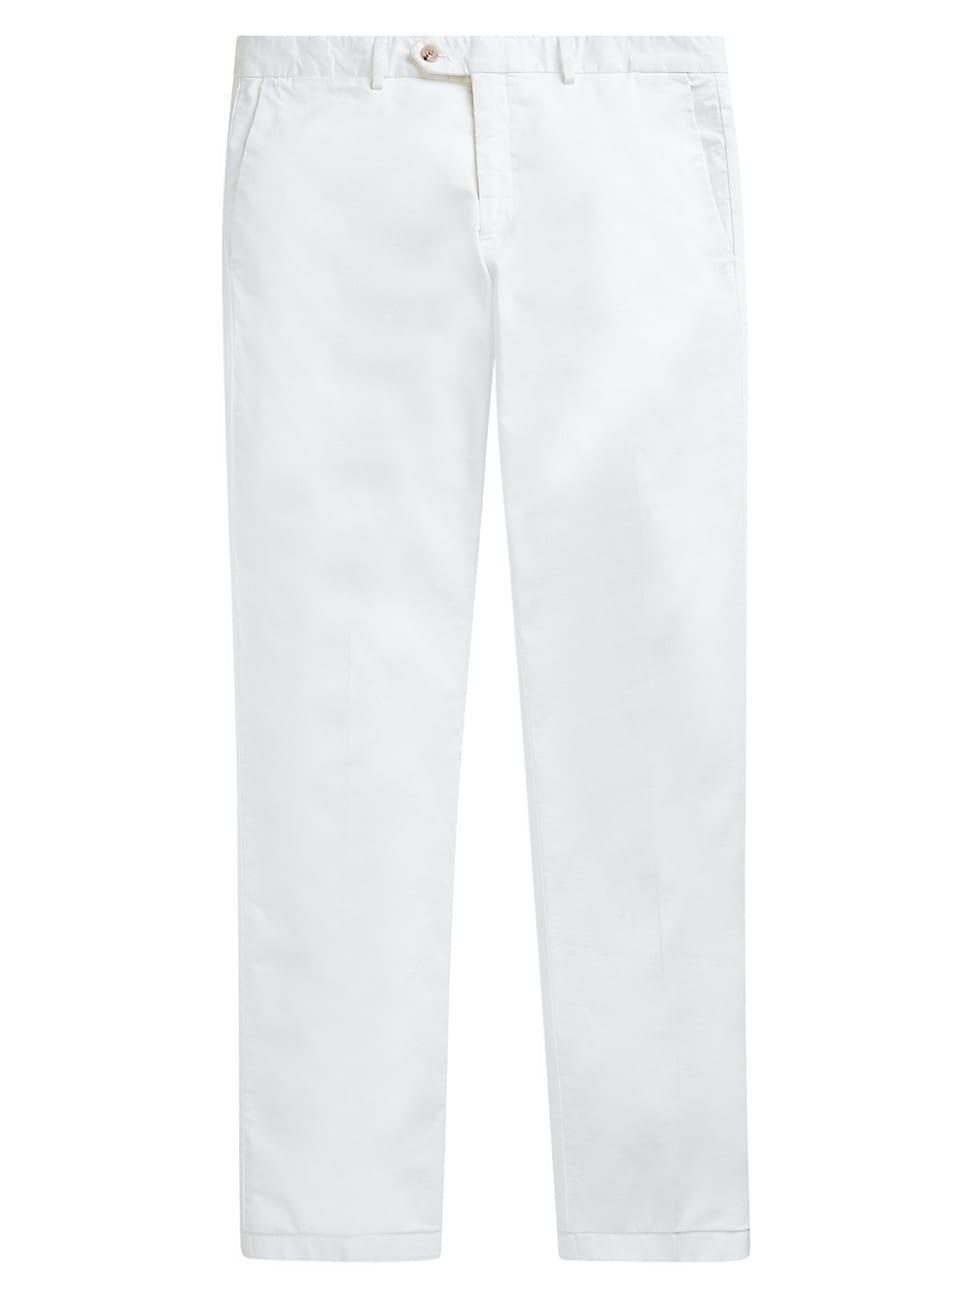 Mens Eaton Flat-Front Pants Product Image